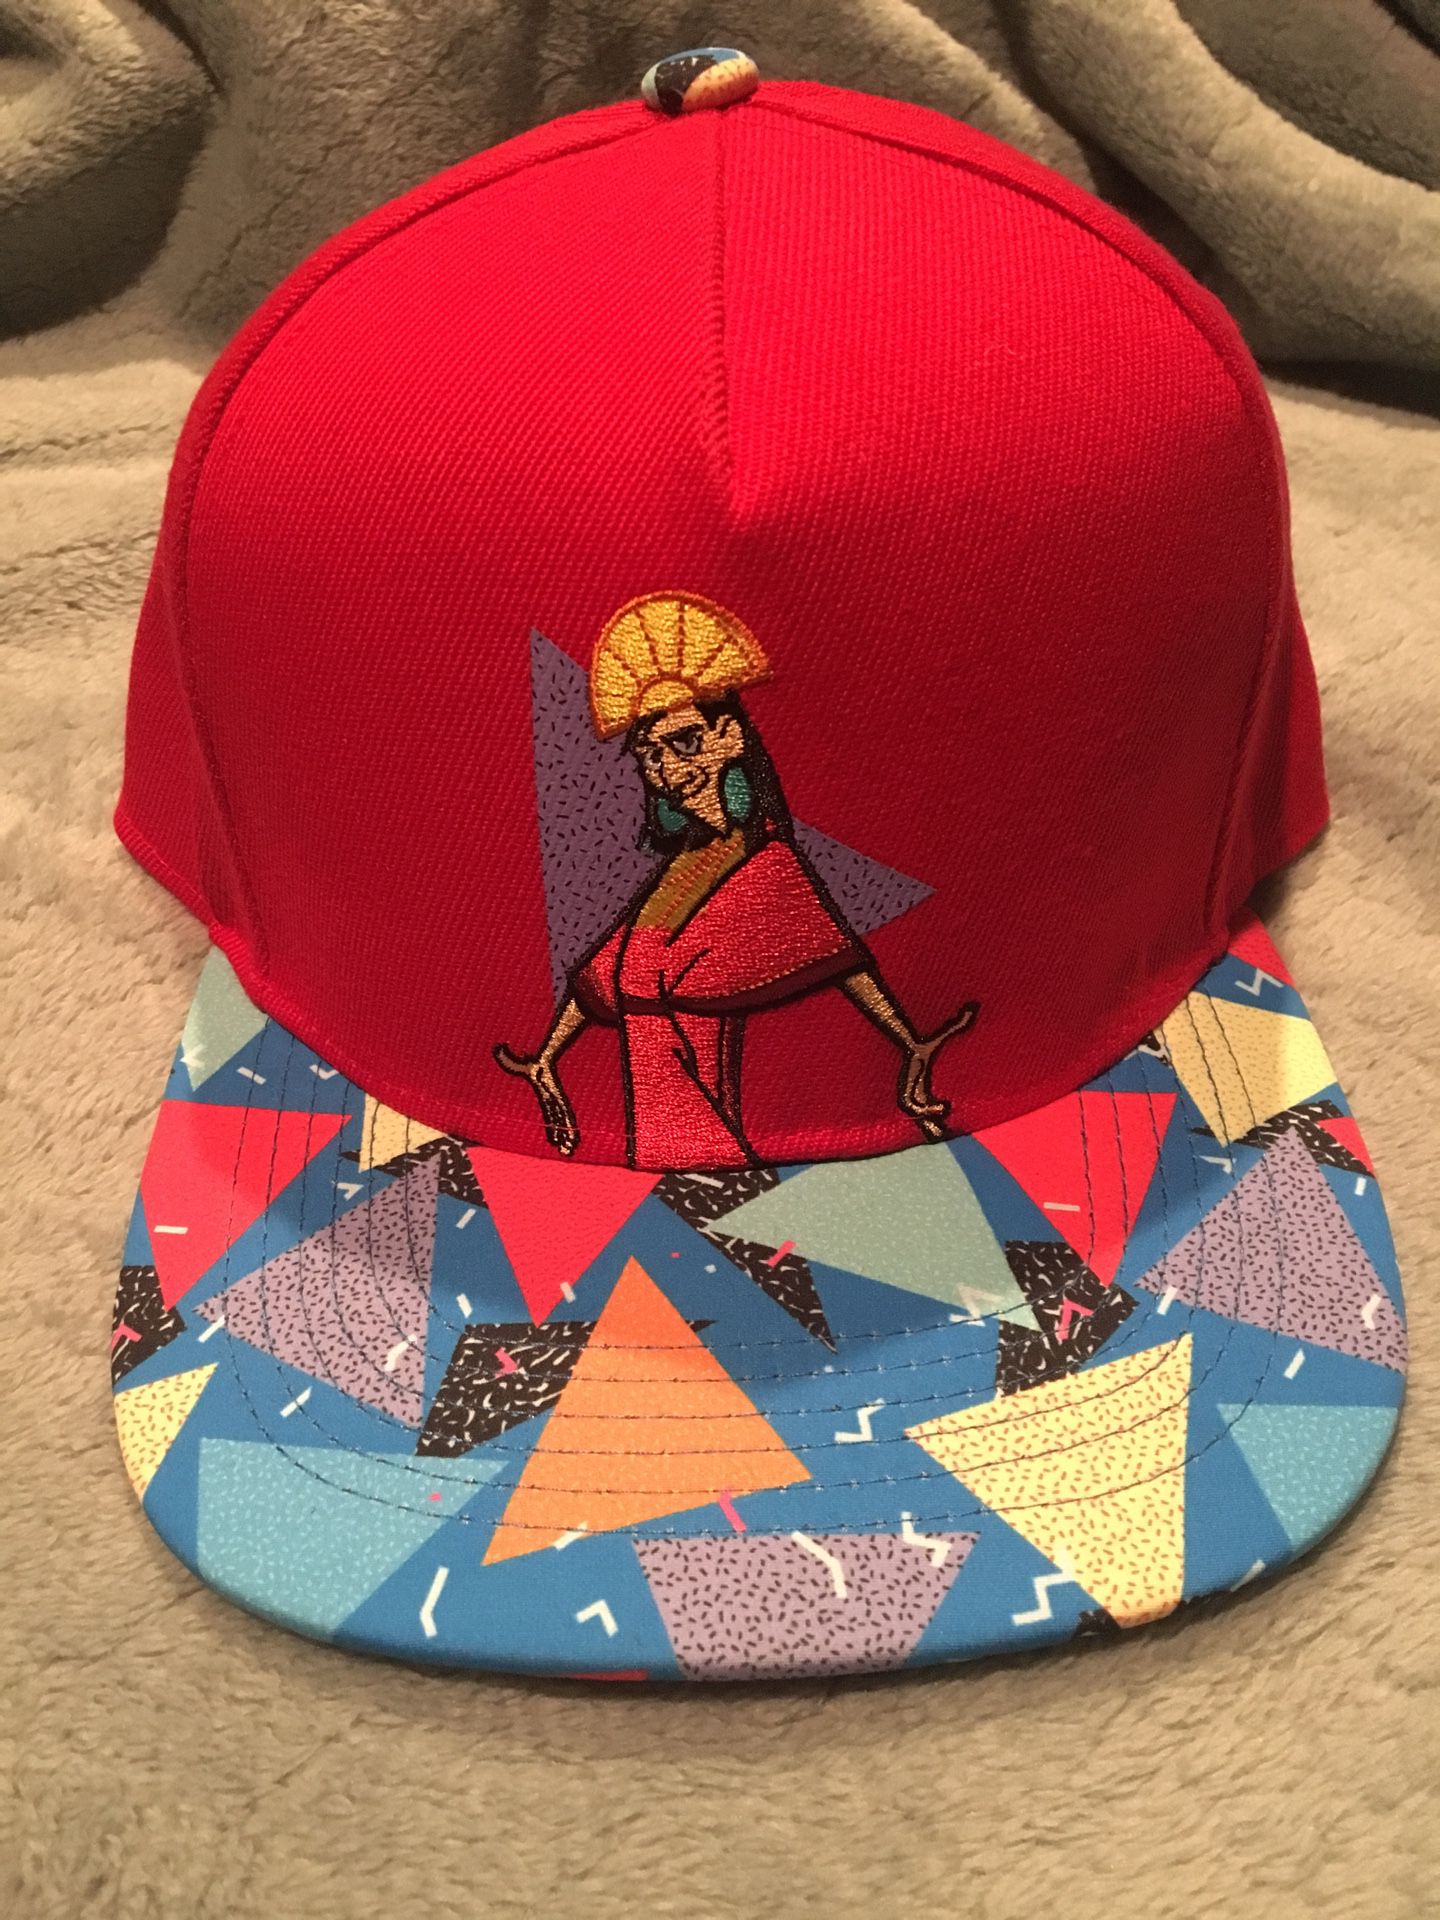 Disney Emperors New Groove hat